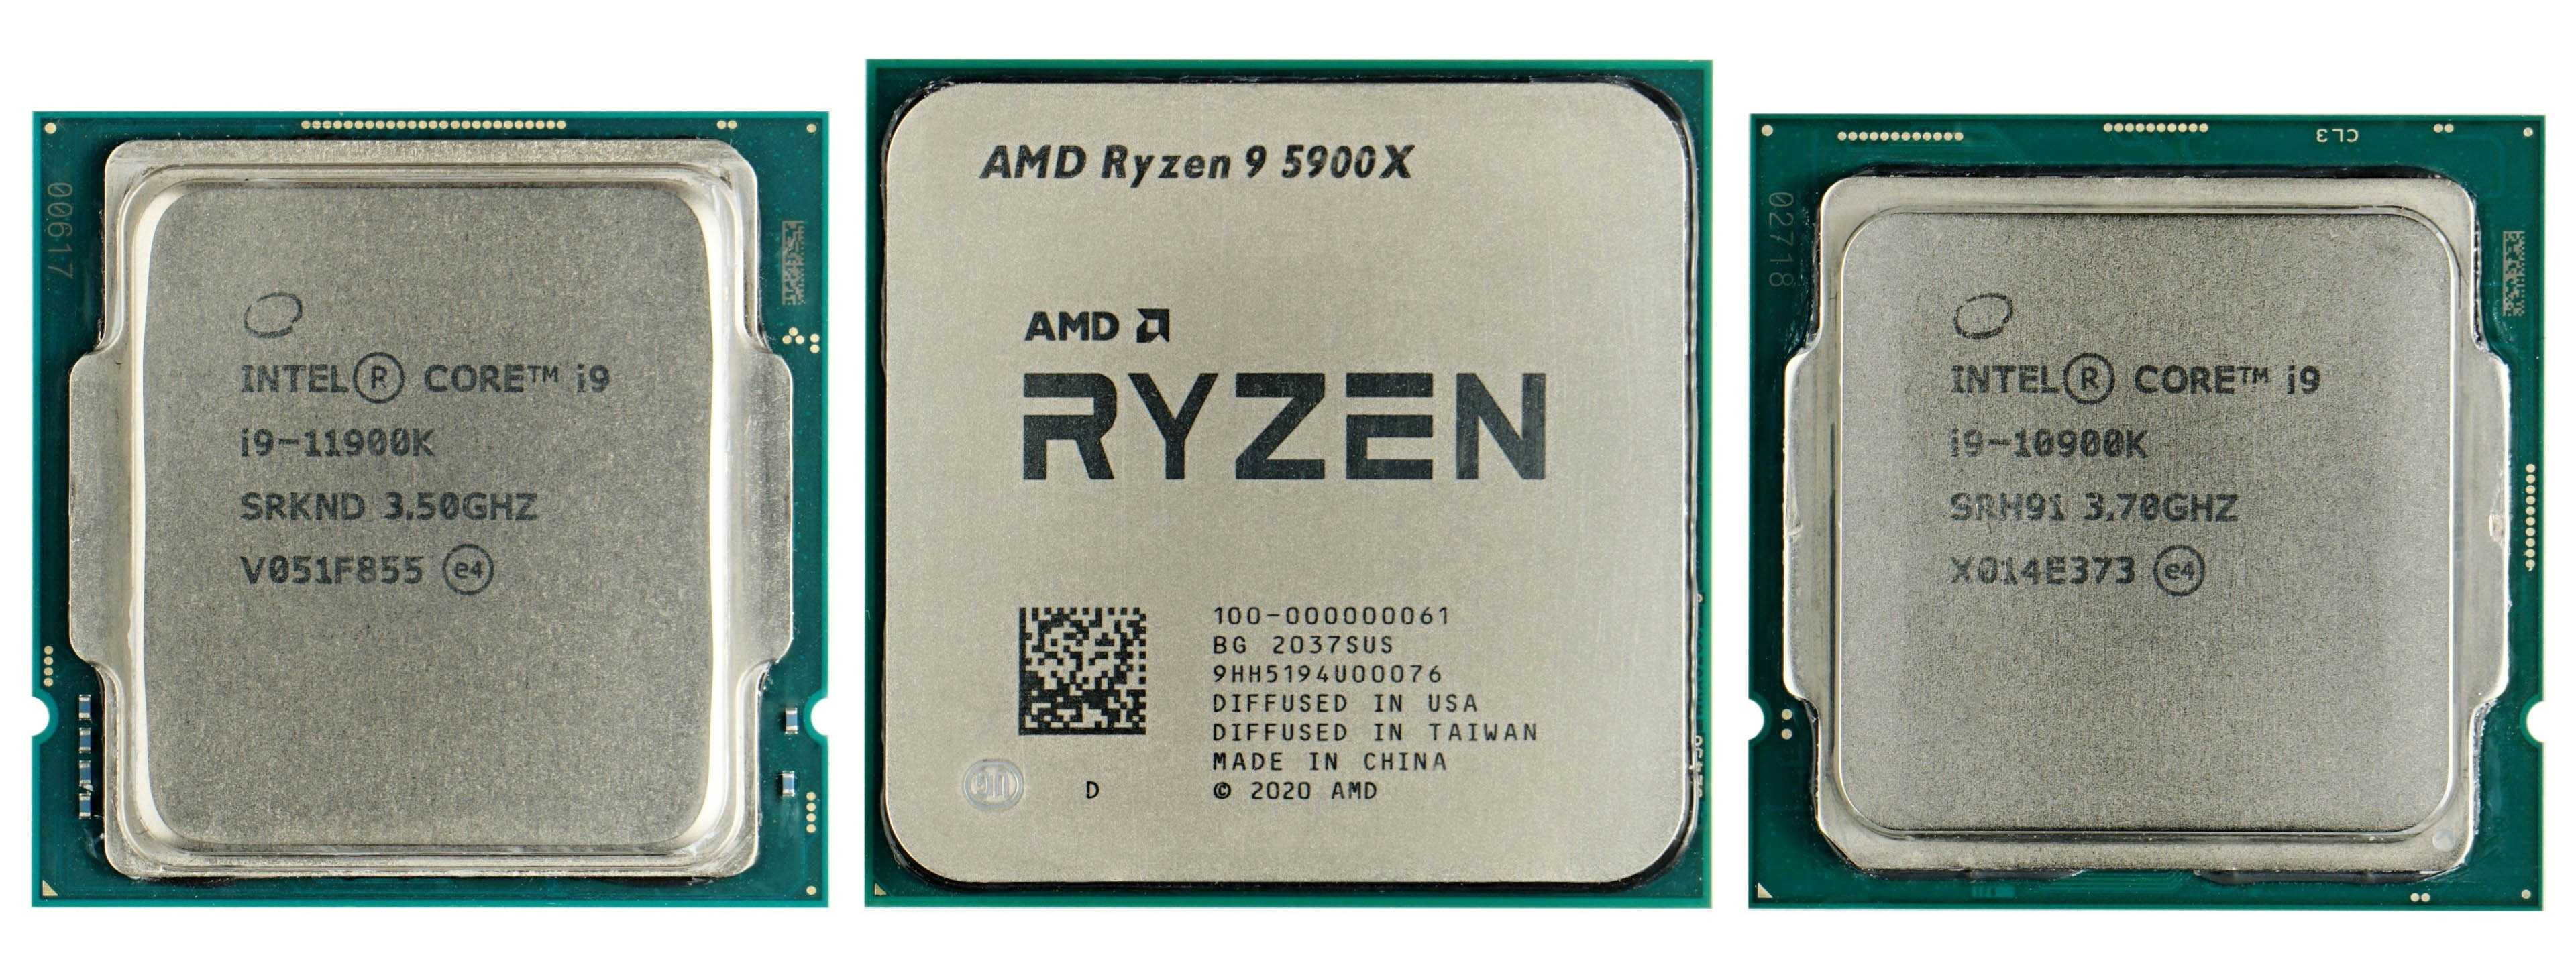 Amd ryzen 9 5900x oem. АМД 9 5900х. 5900х Ryzen. CPU AMD Ryzen 9 5900x OEM. Intel Core i9-11900k.